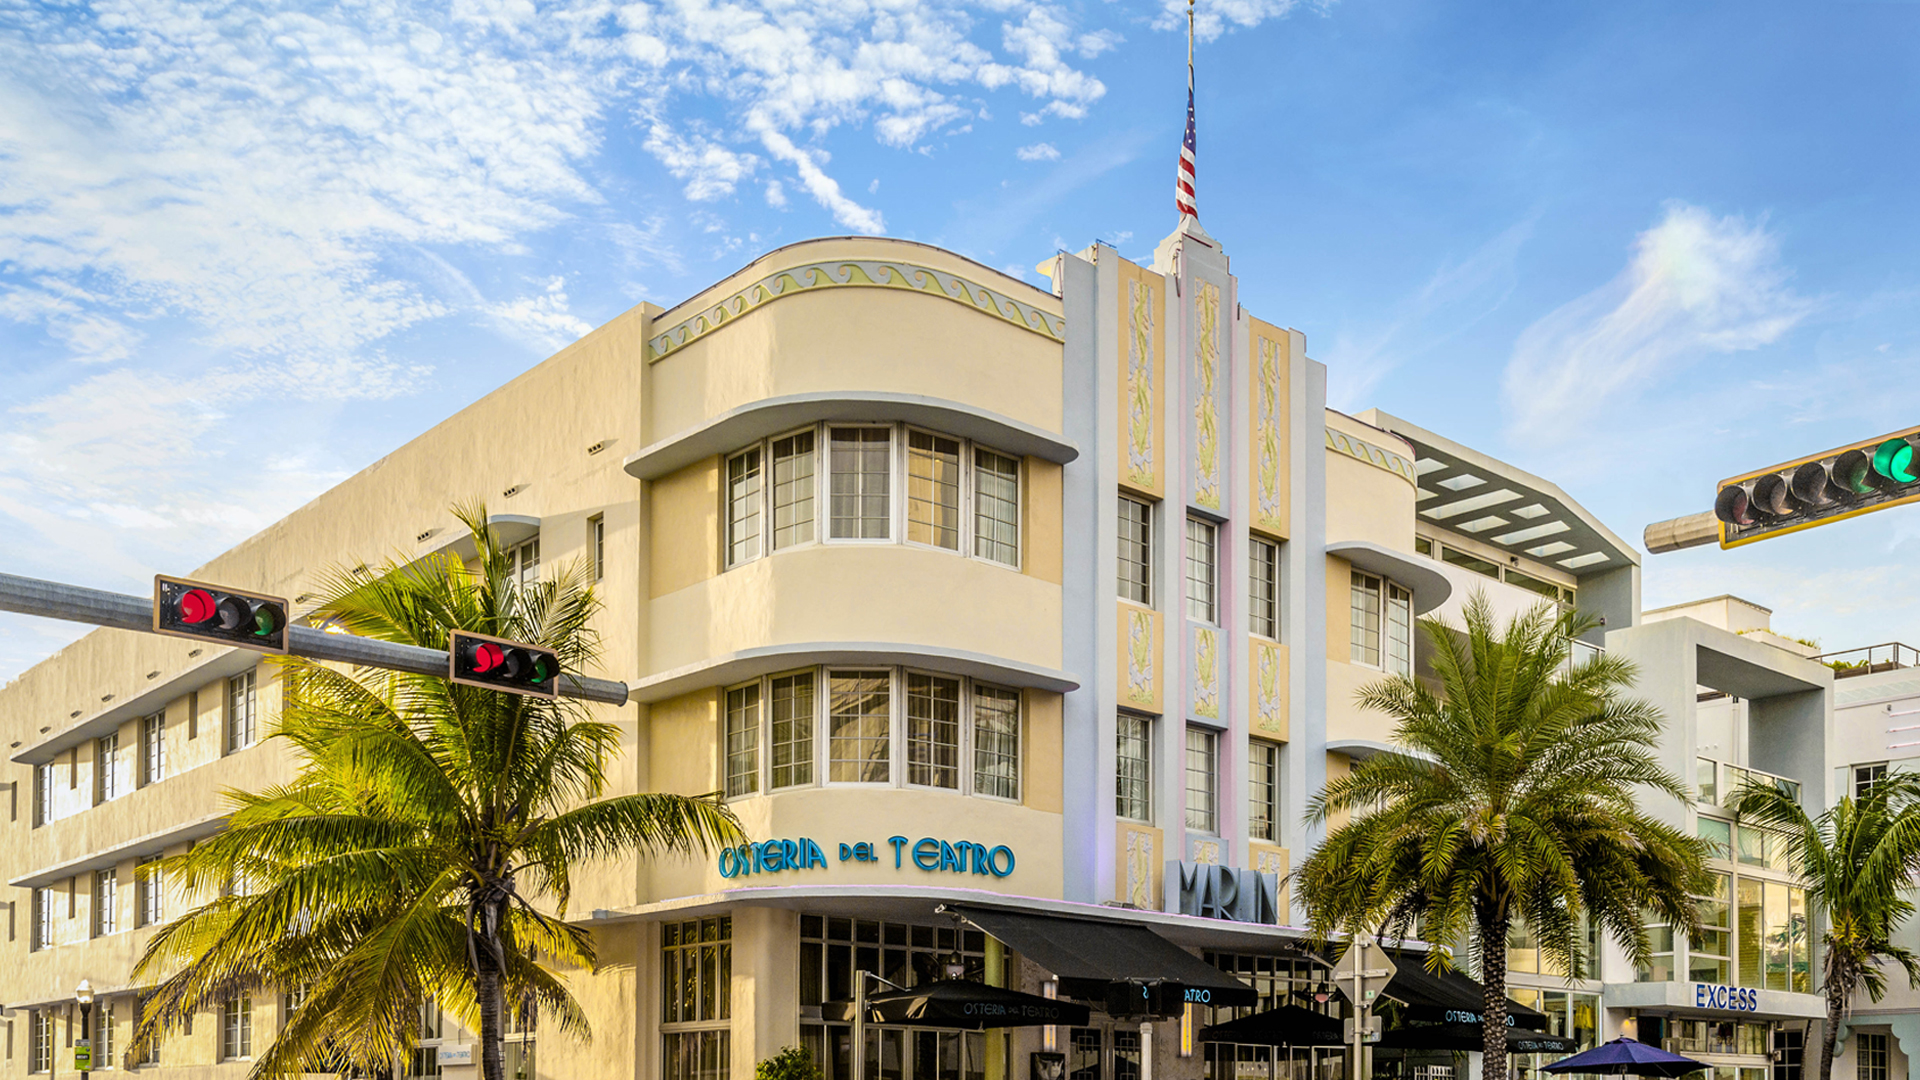   THE MARLIN HOTEL    Miami Beach, FL  